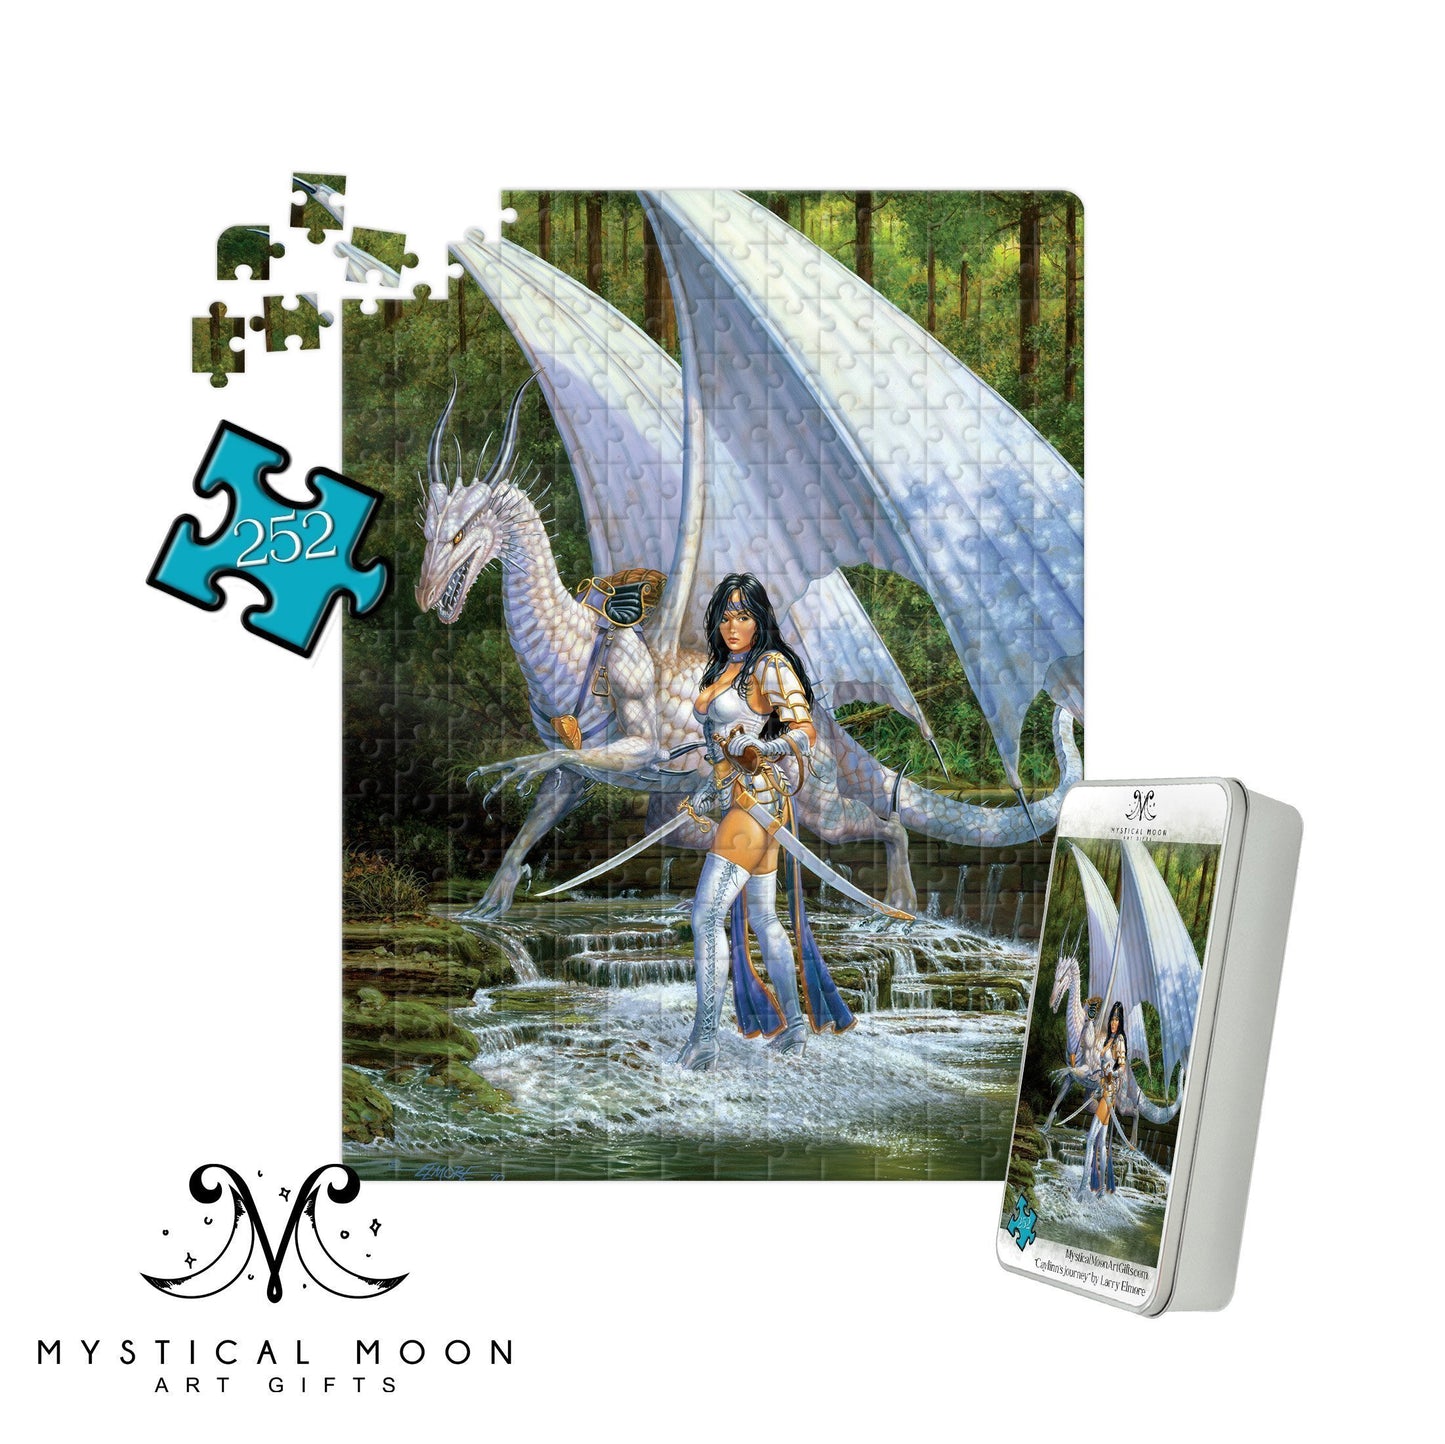 Caylinn's Journey by Larry Elmore. 252 Piece Puzzle